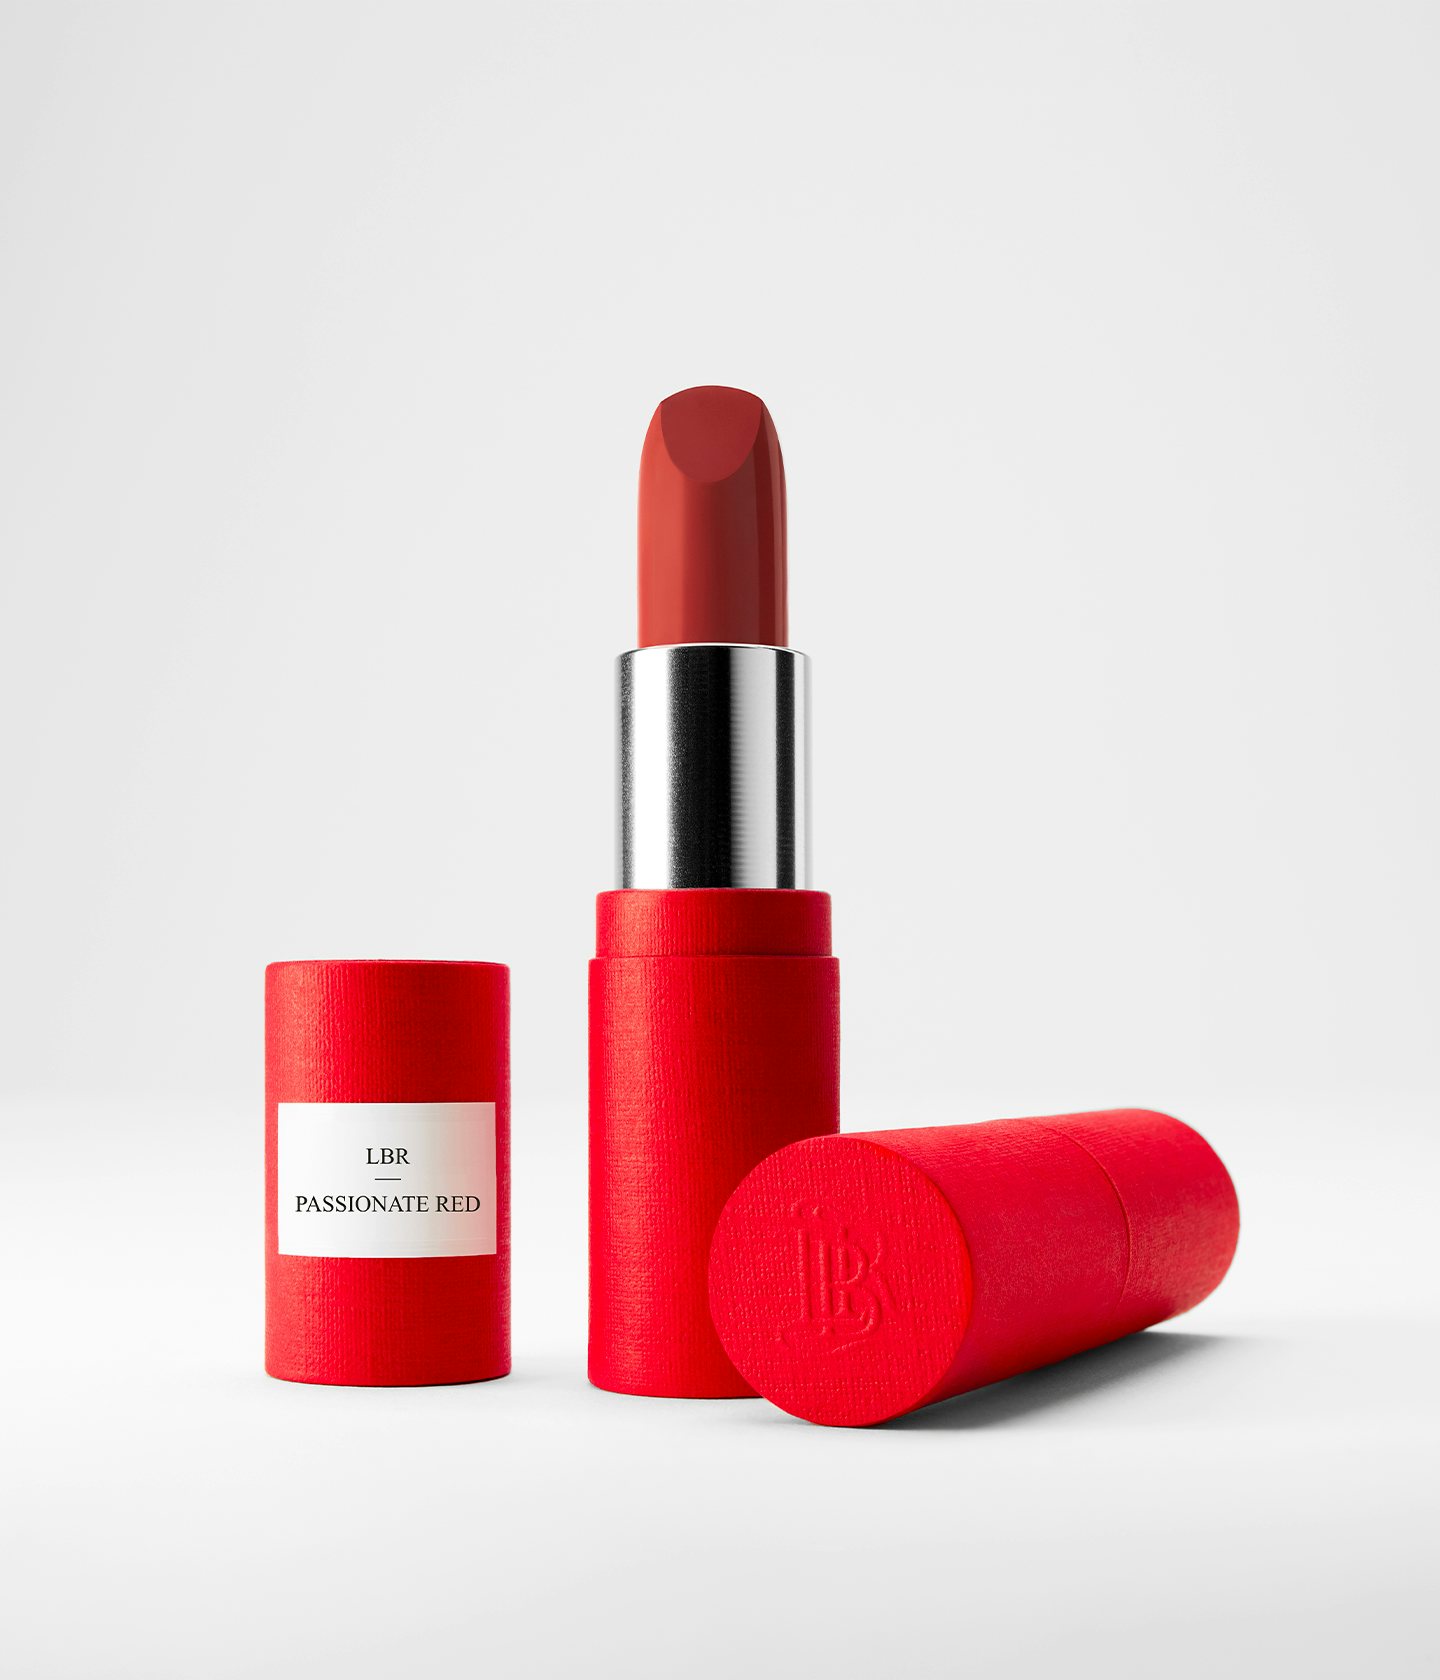 La bouche rouge Passionate Red lipstick in the red paper case